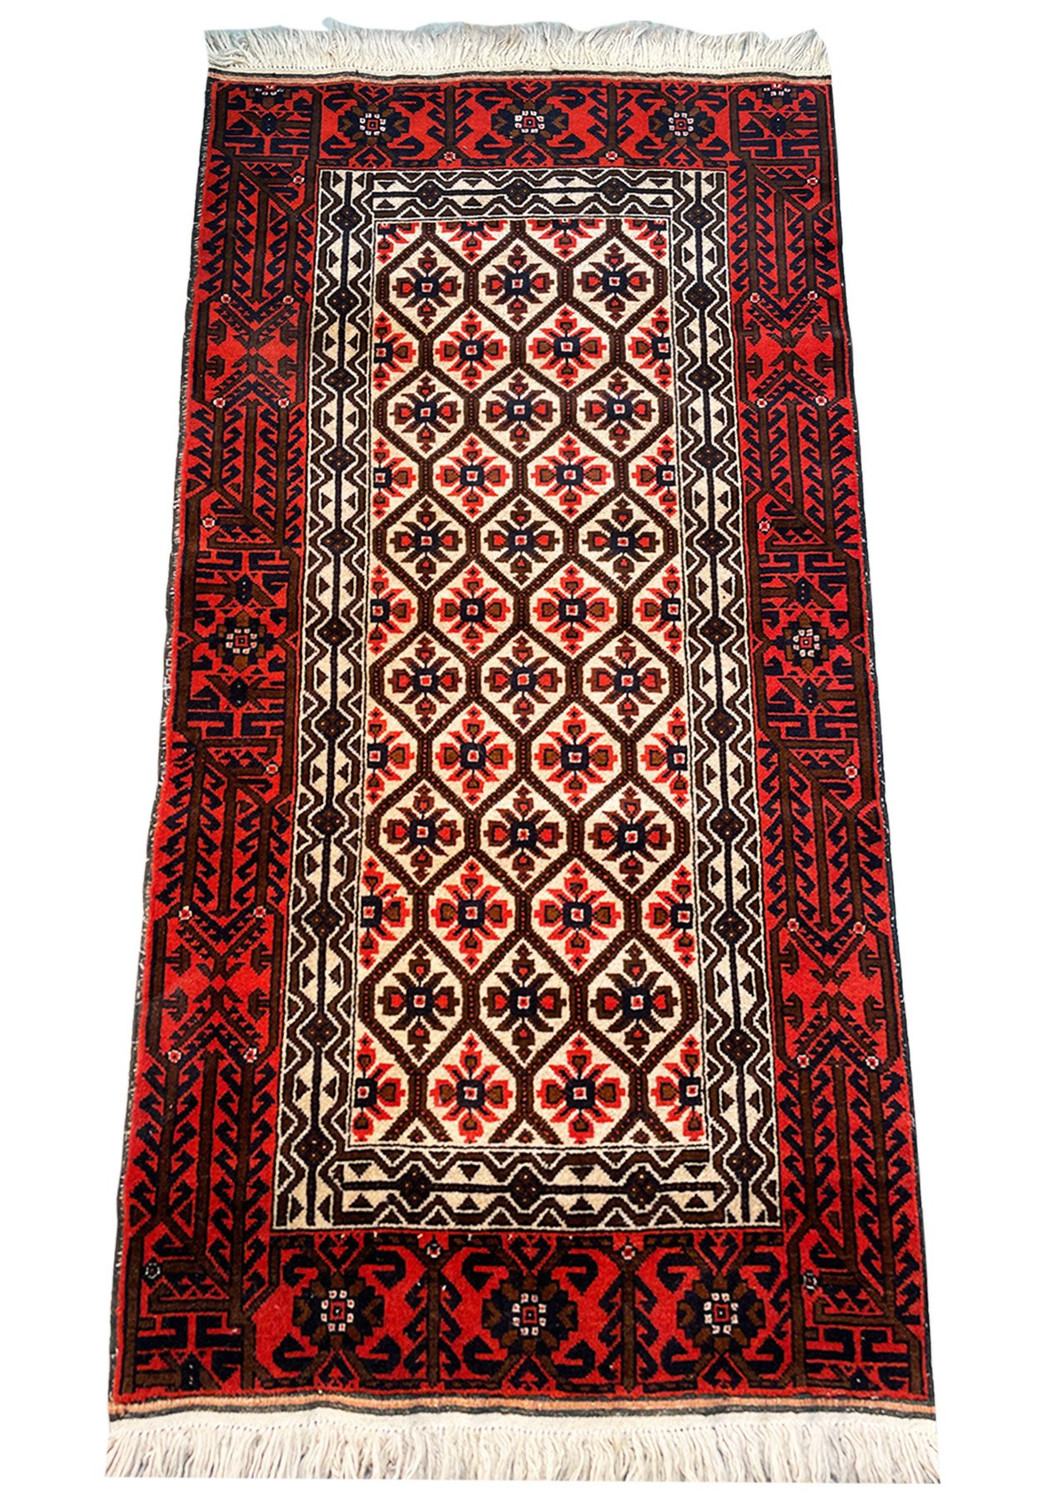 2'8" x 5'3" Persian Baluch Rug